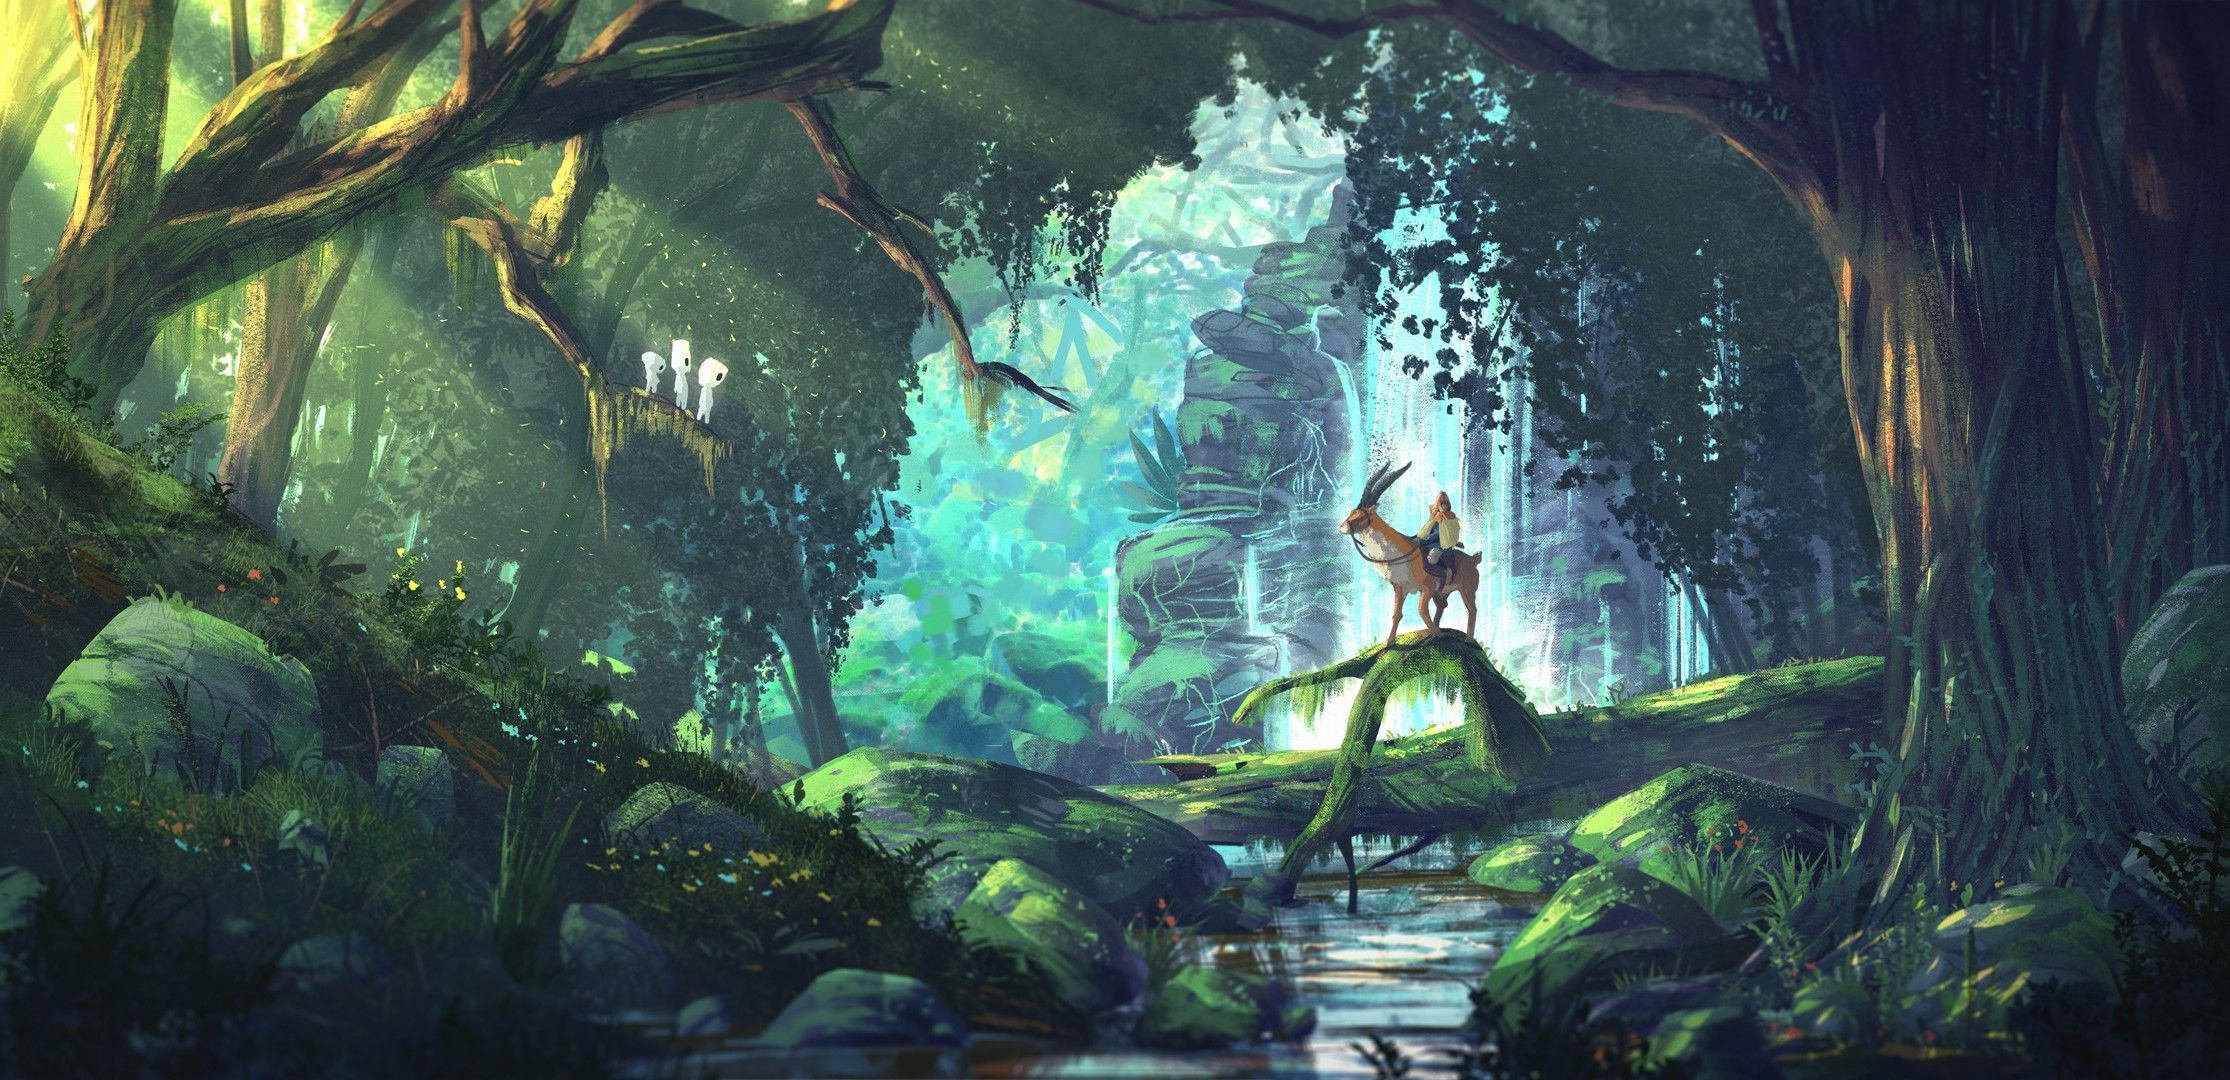 73+] Anime Forest Background - WallpaperSafari